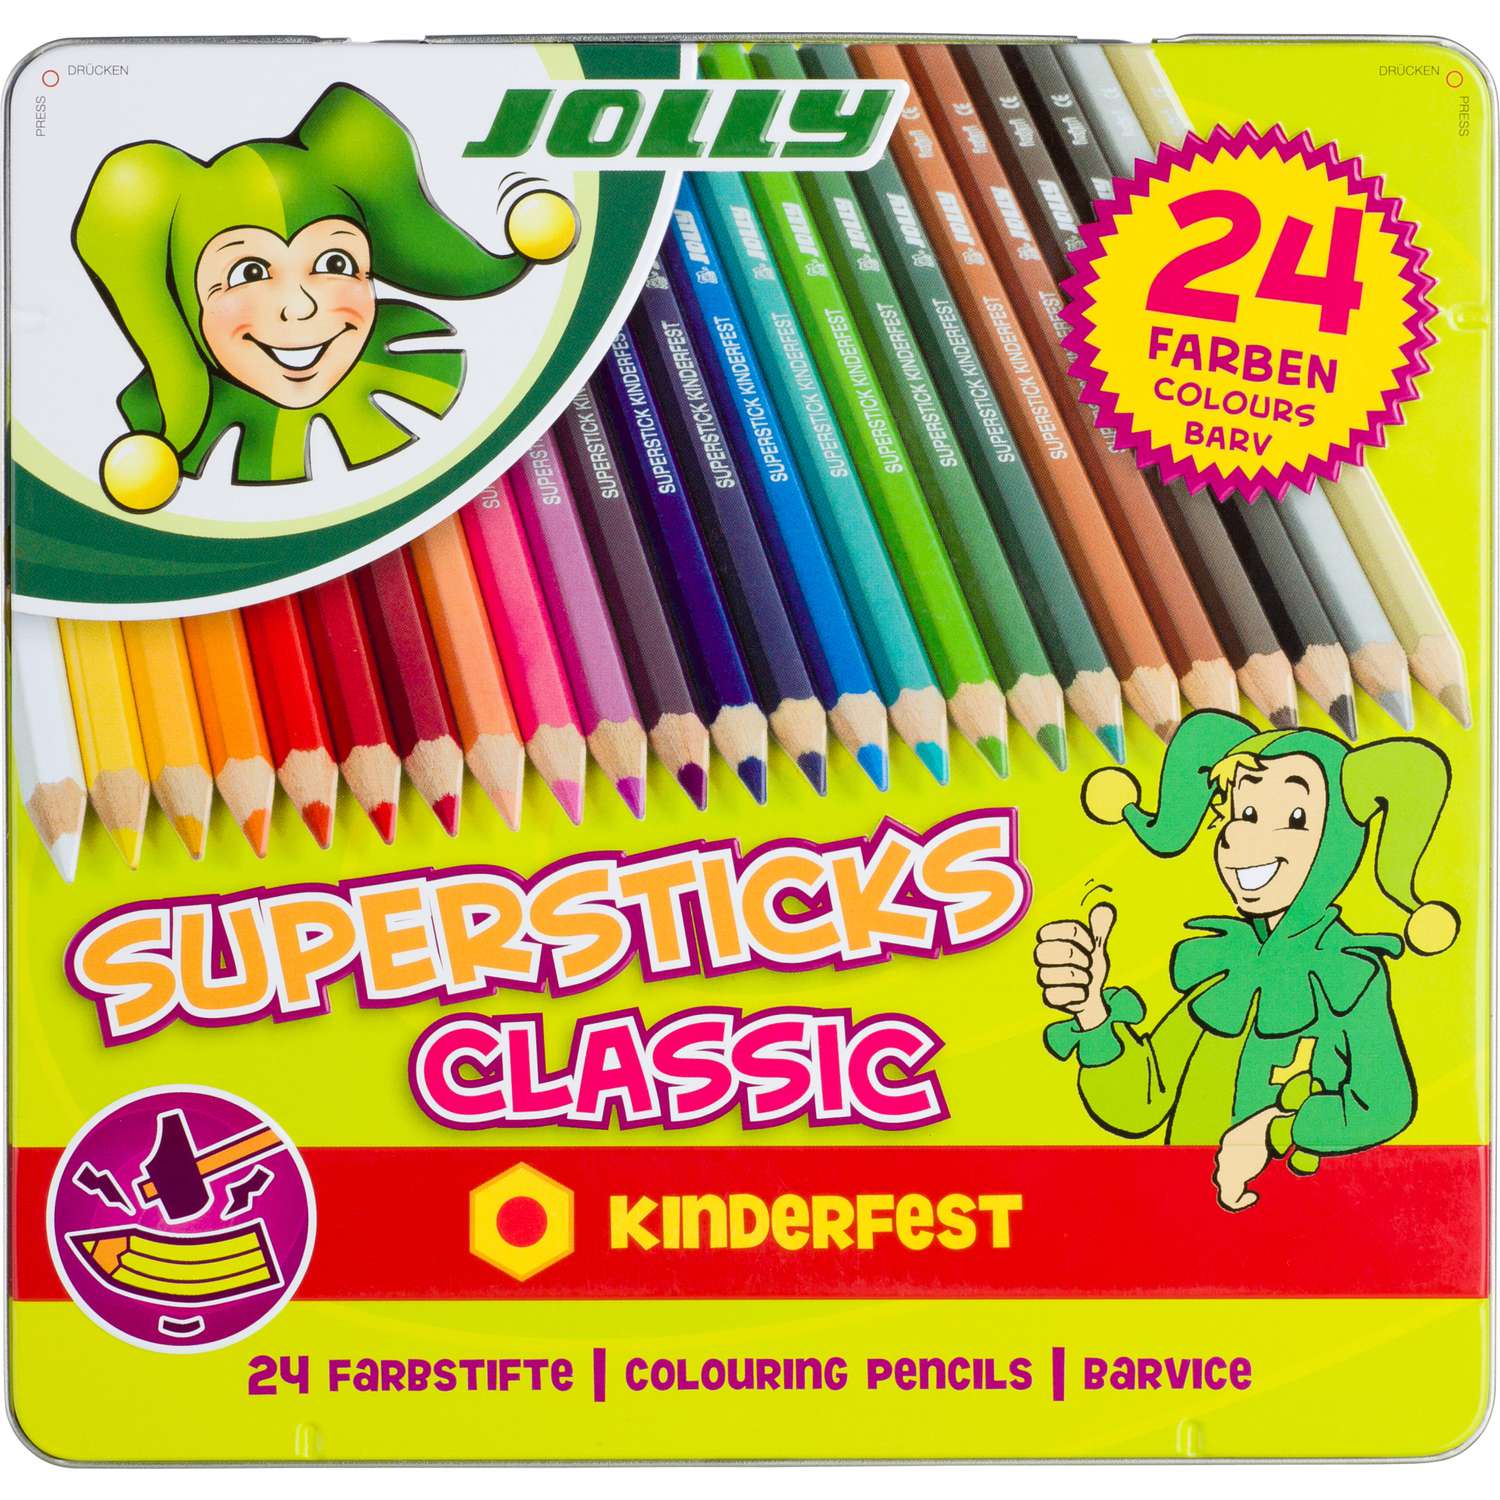 Jolly Buntstifte Superstick Classic 48er Metalletui Farben kinderfest XXL Box 